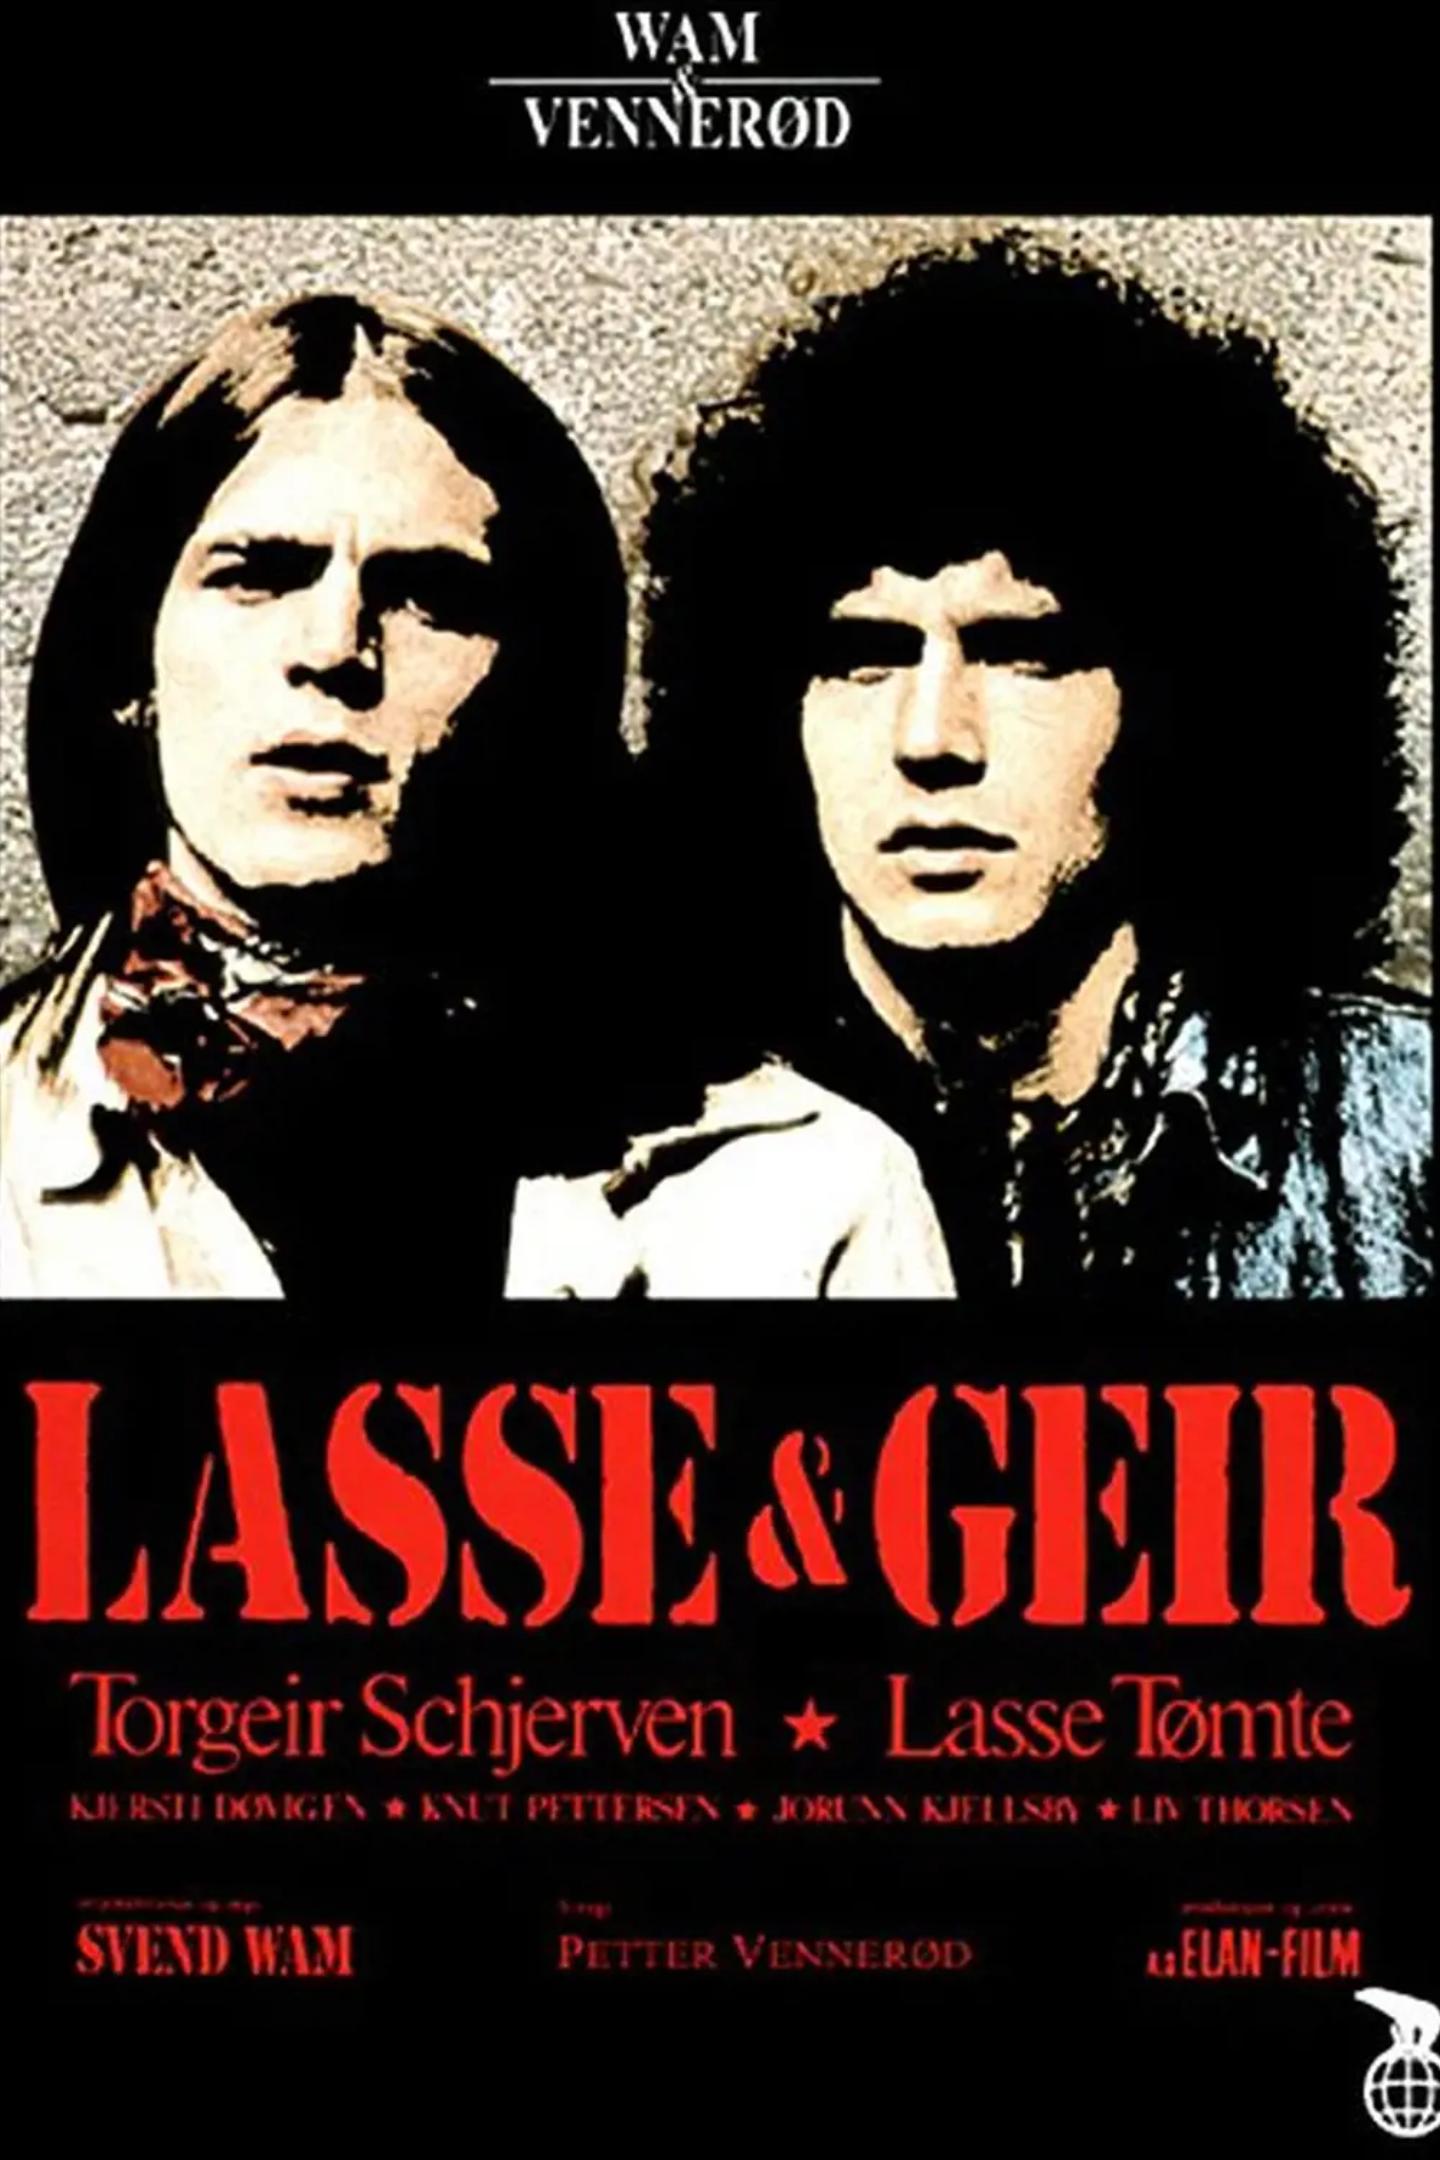 Plakat for 'Lasse & Geir'